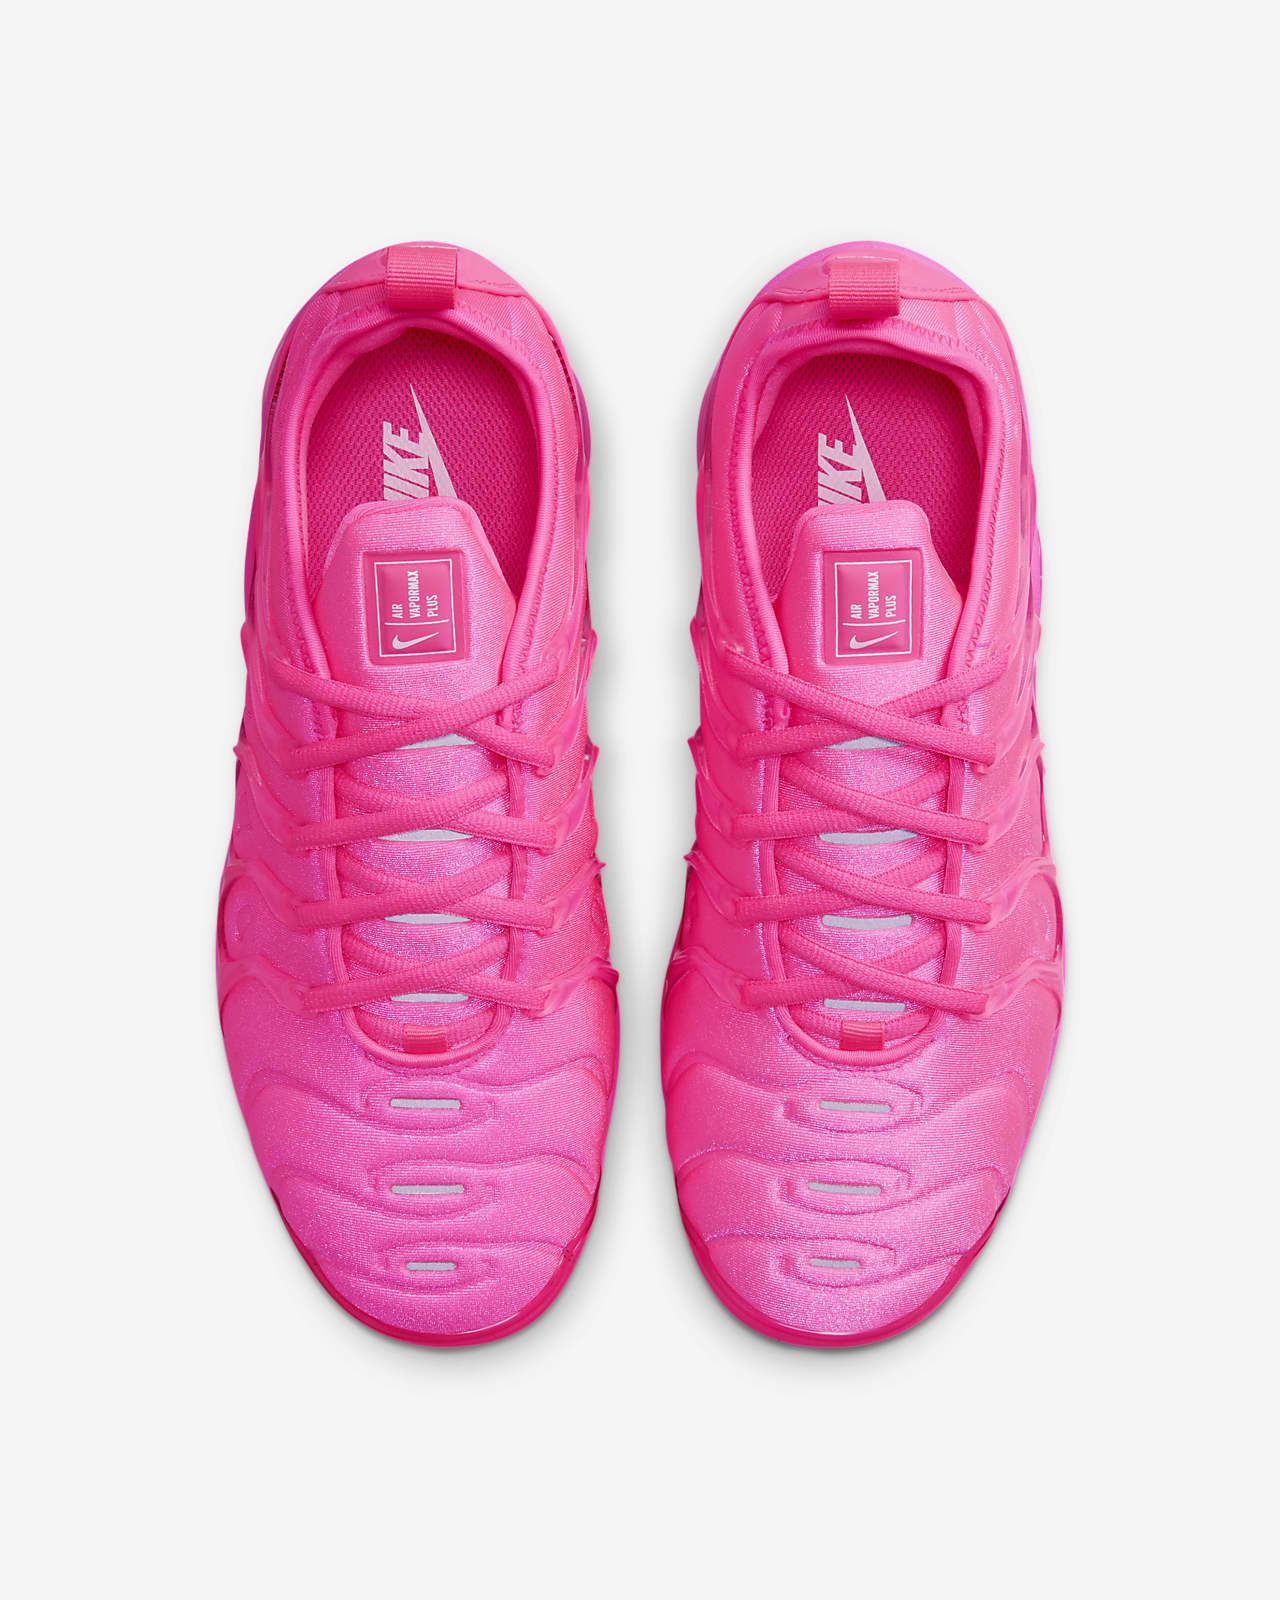 Nike Air VaporMax Plus Bright Crimson Pink Blast (Women's